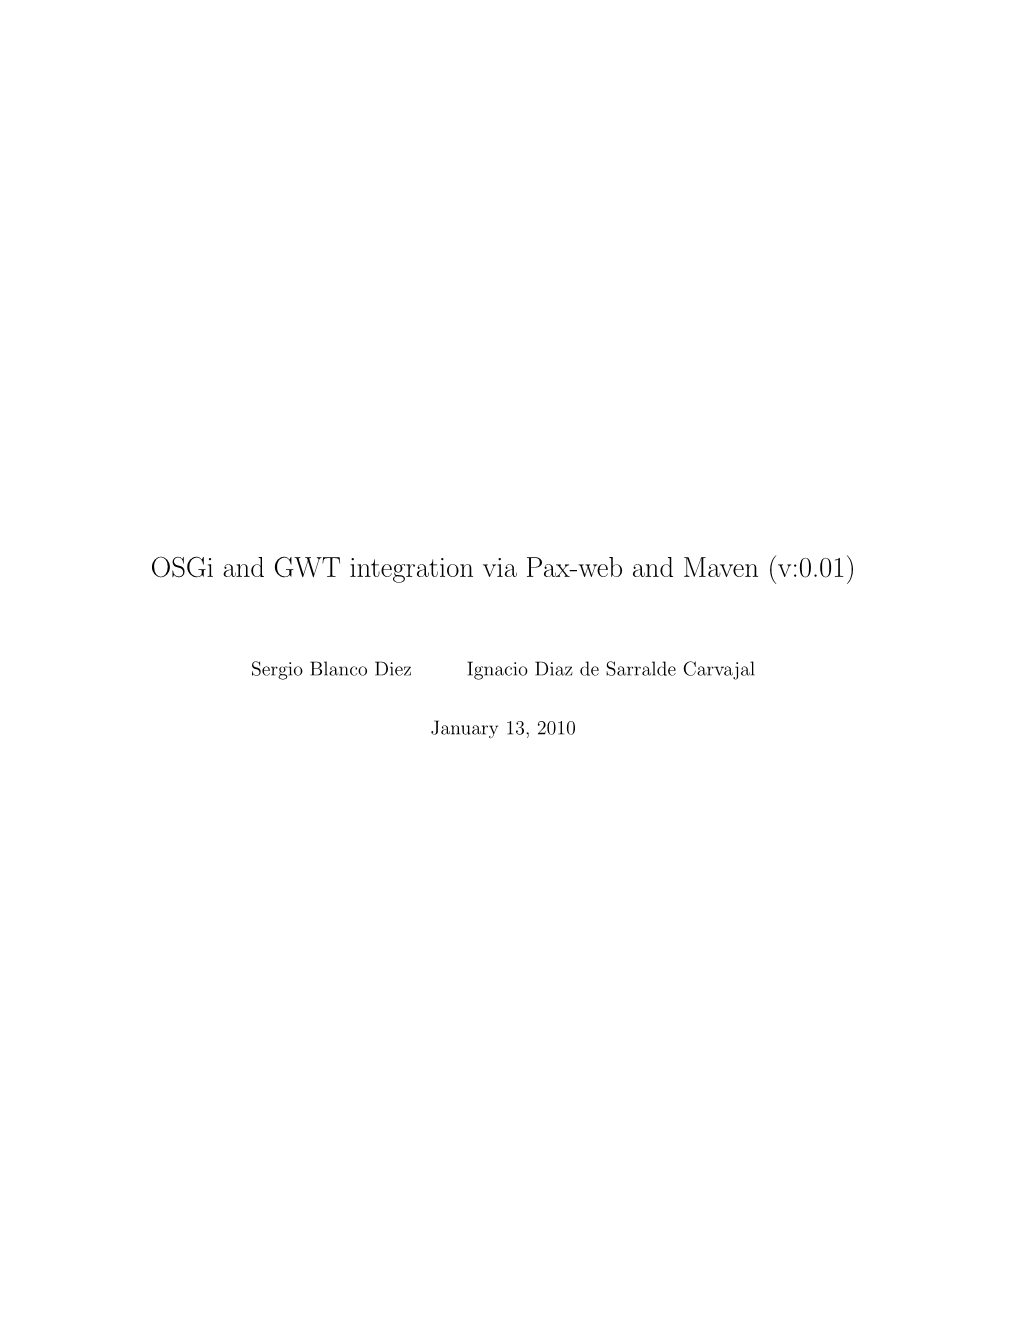 Osgi and GWT Integration Via Pax-Web and Maven (V:0.01)